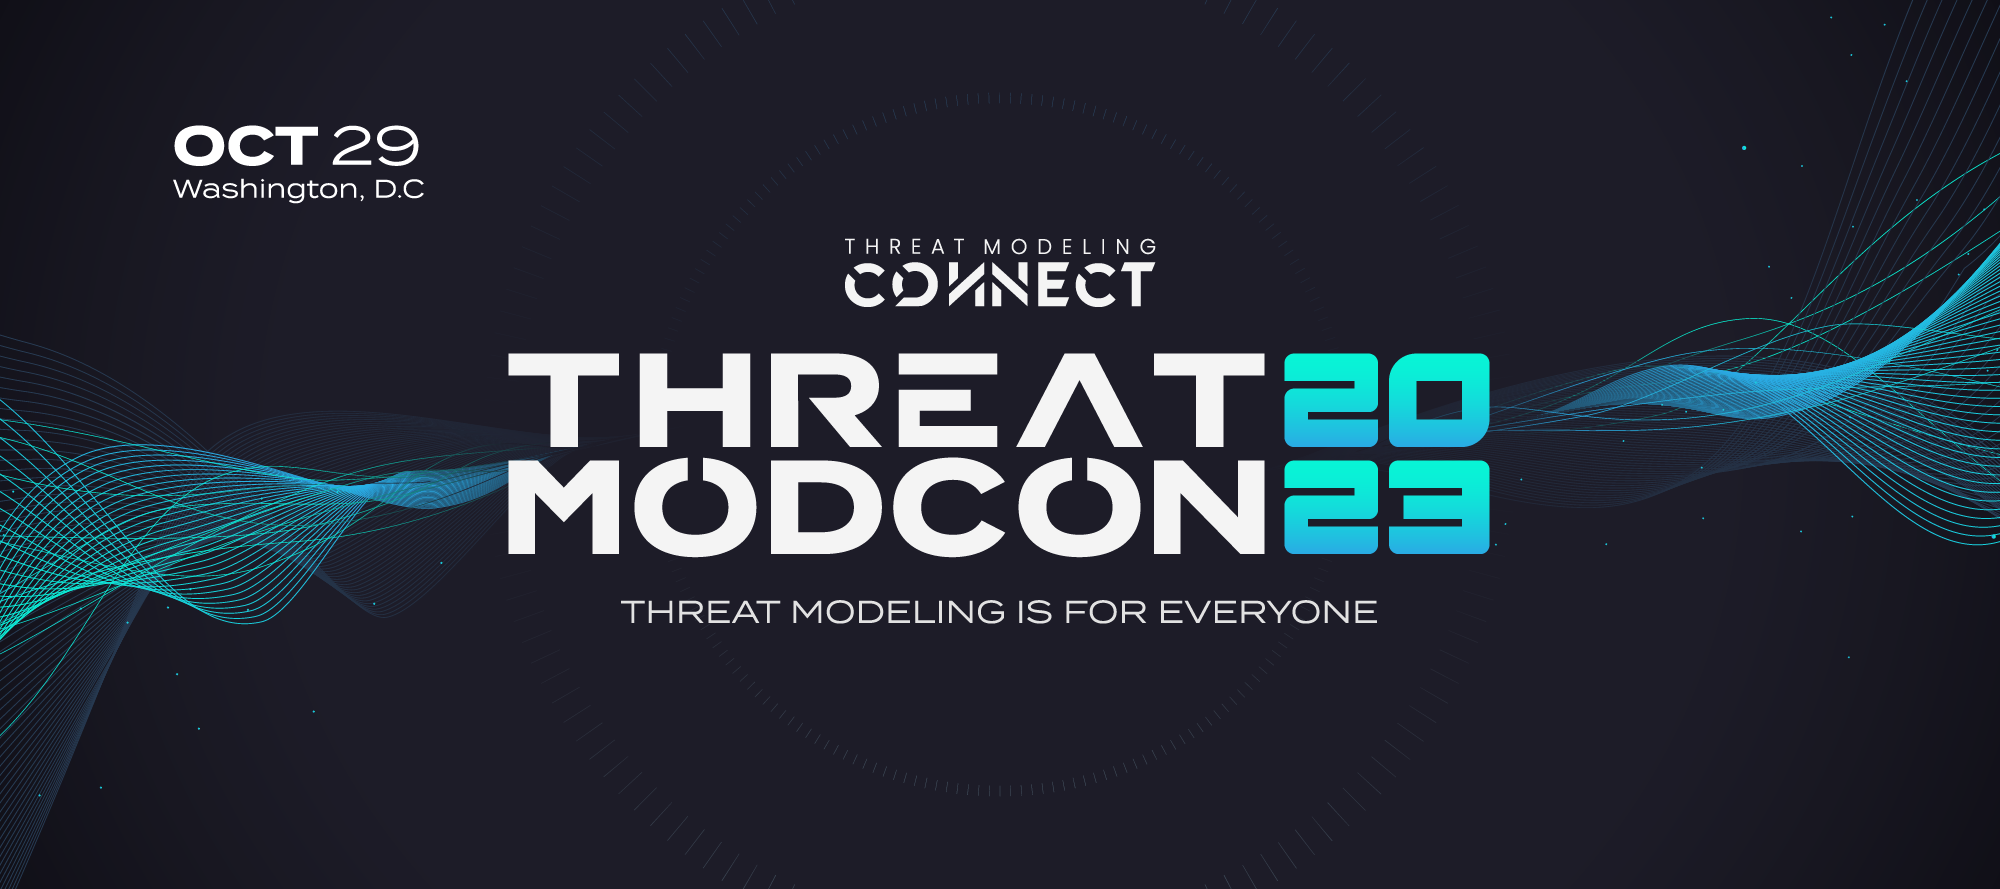 ThreatModCon